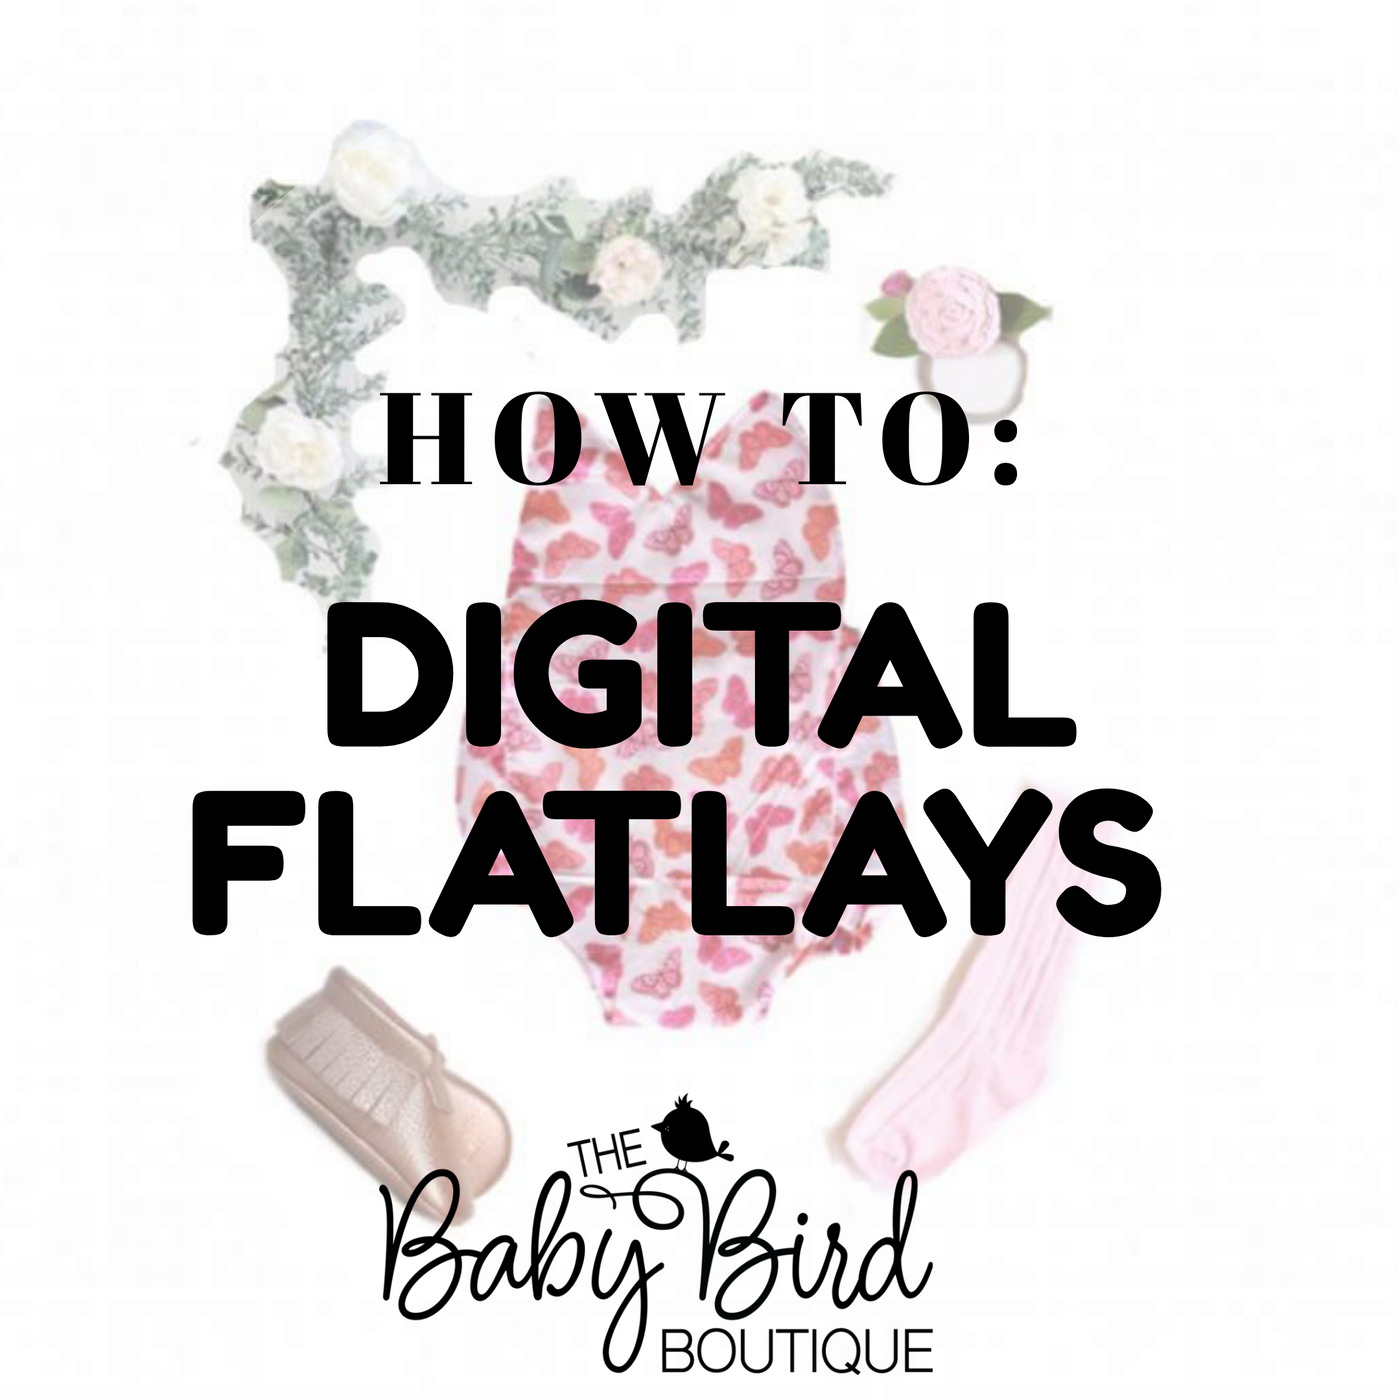 HOW TO: Digital FlatLays